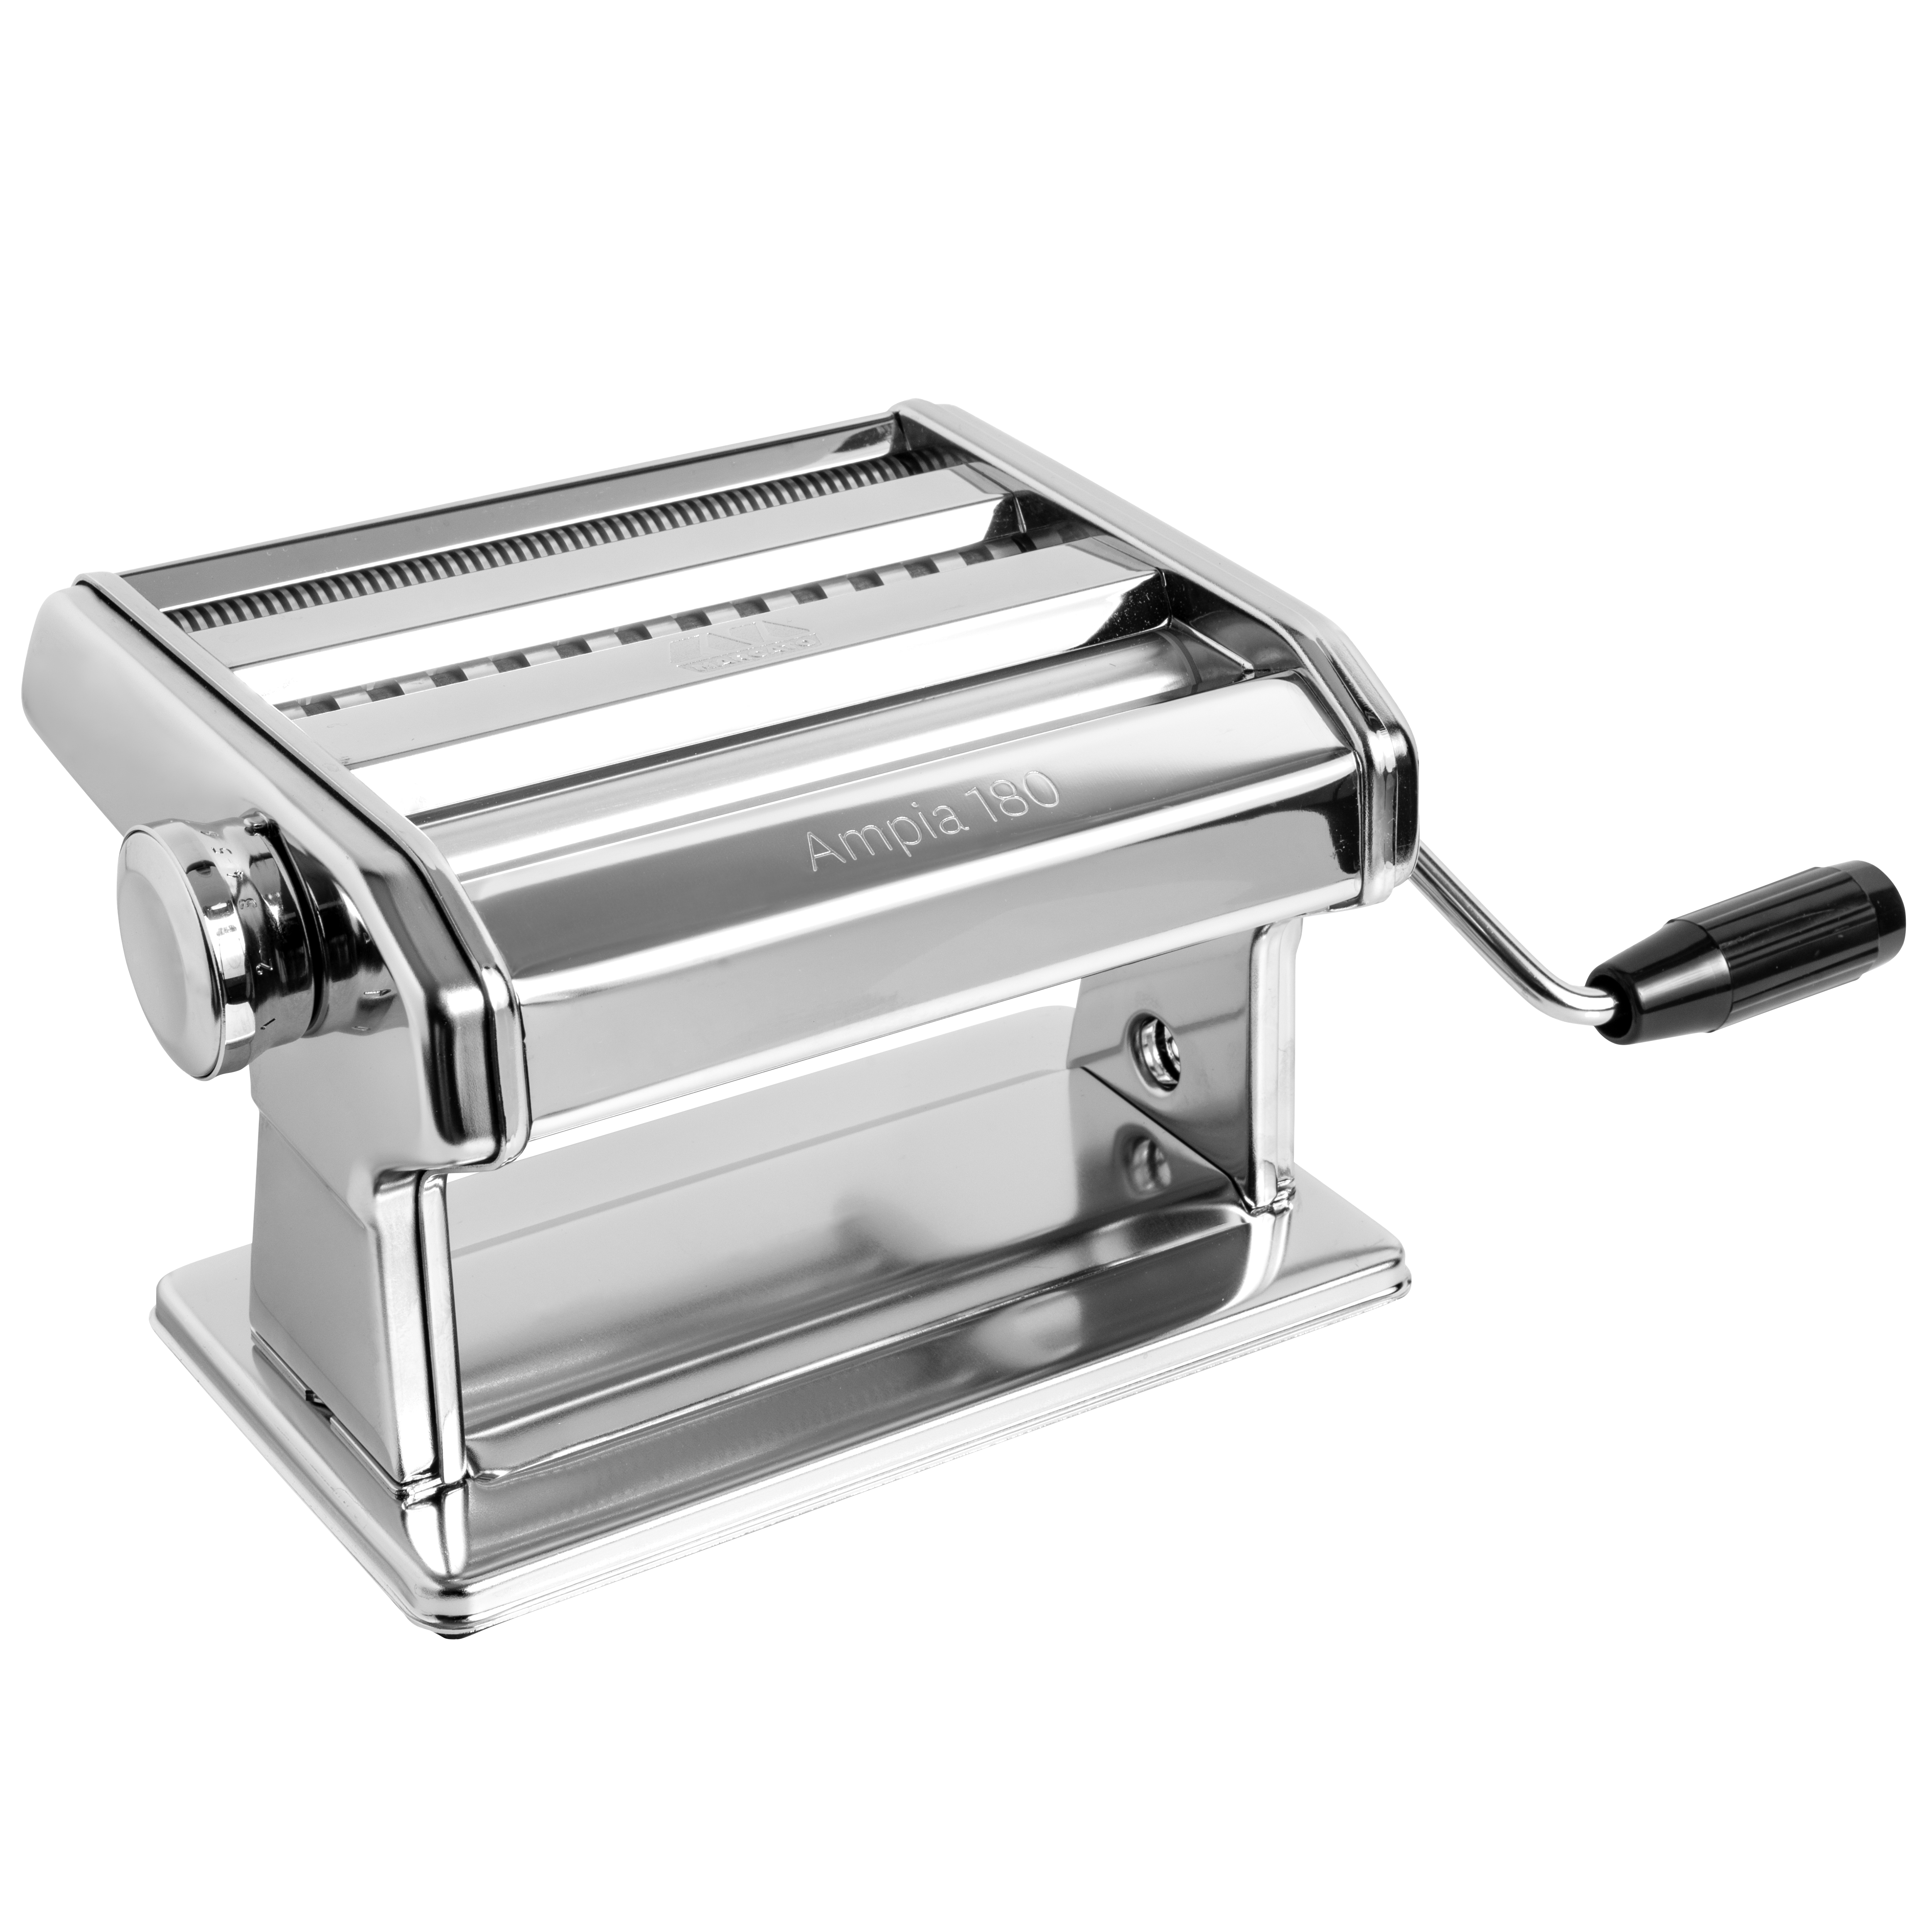  Marcato Atlas 150 Design - Pasta Machine, AT-150-DES : Home &  Kitchen